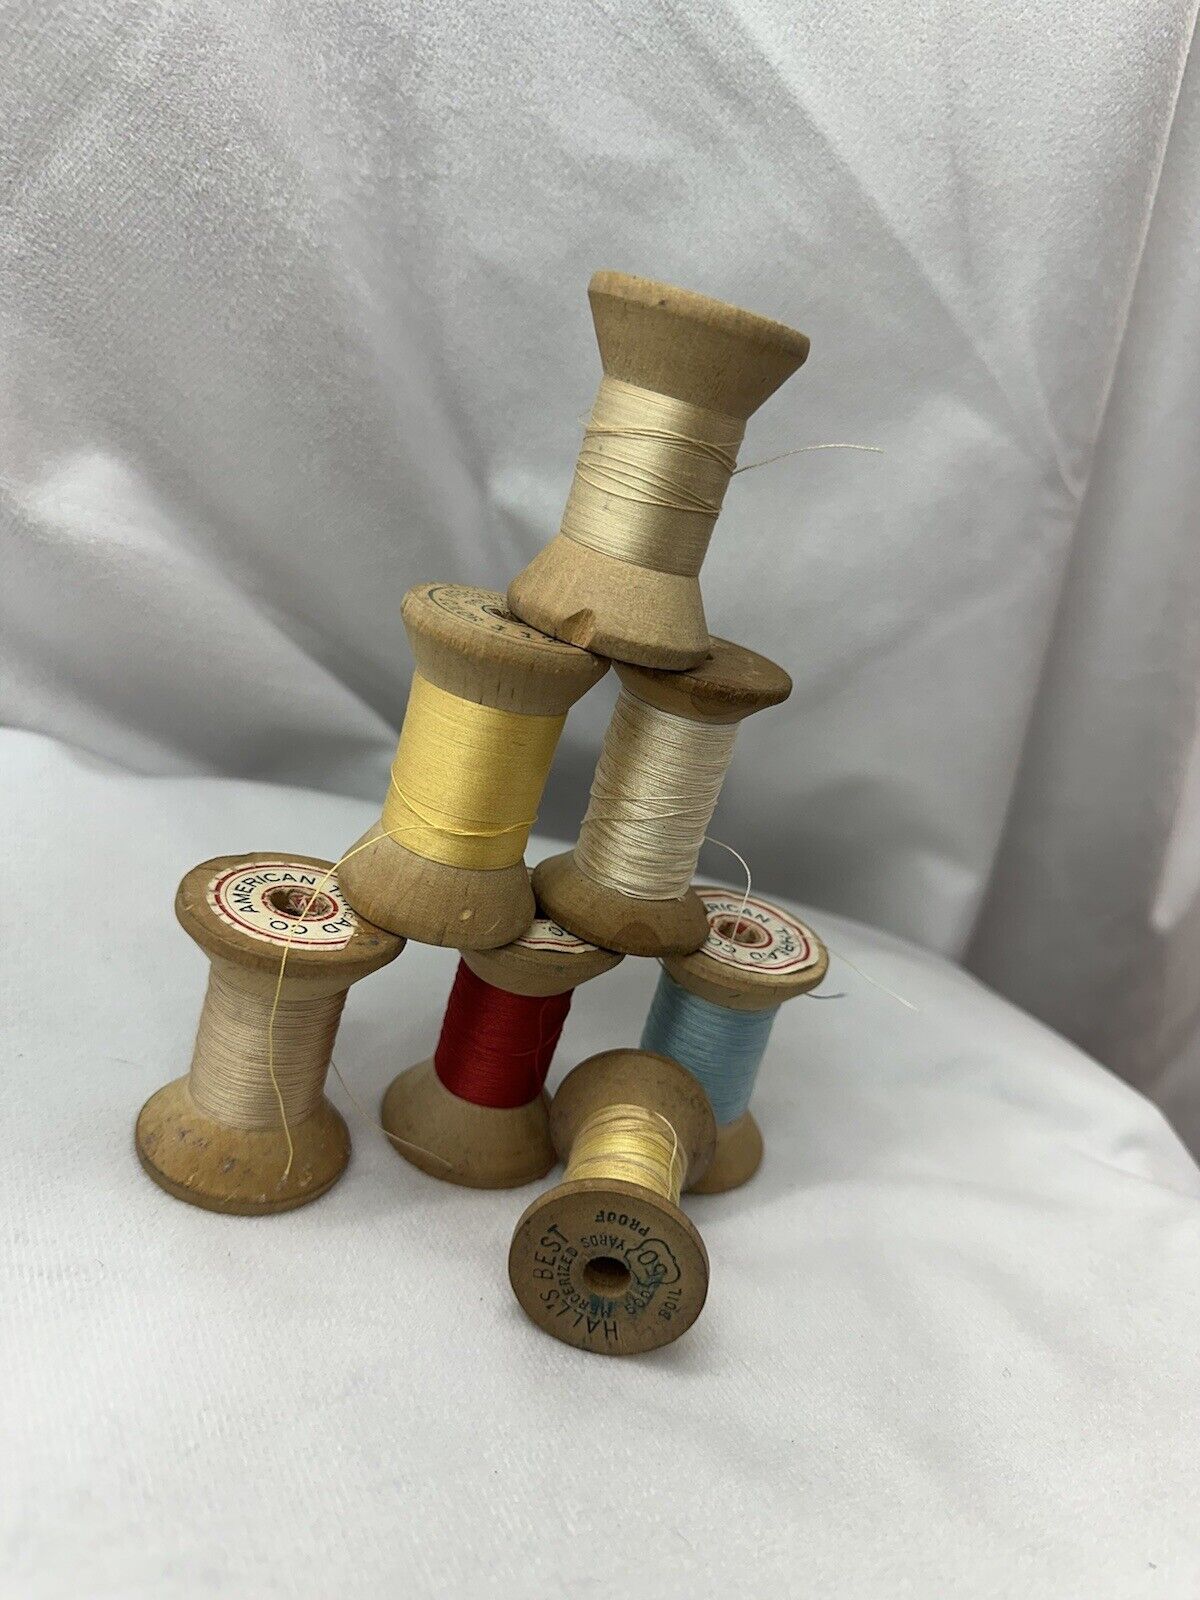 7 Antique/vintage Thread Spools With Thread